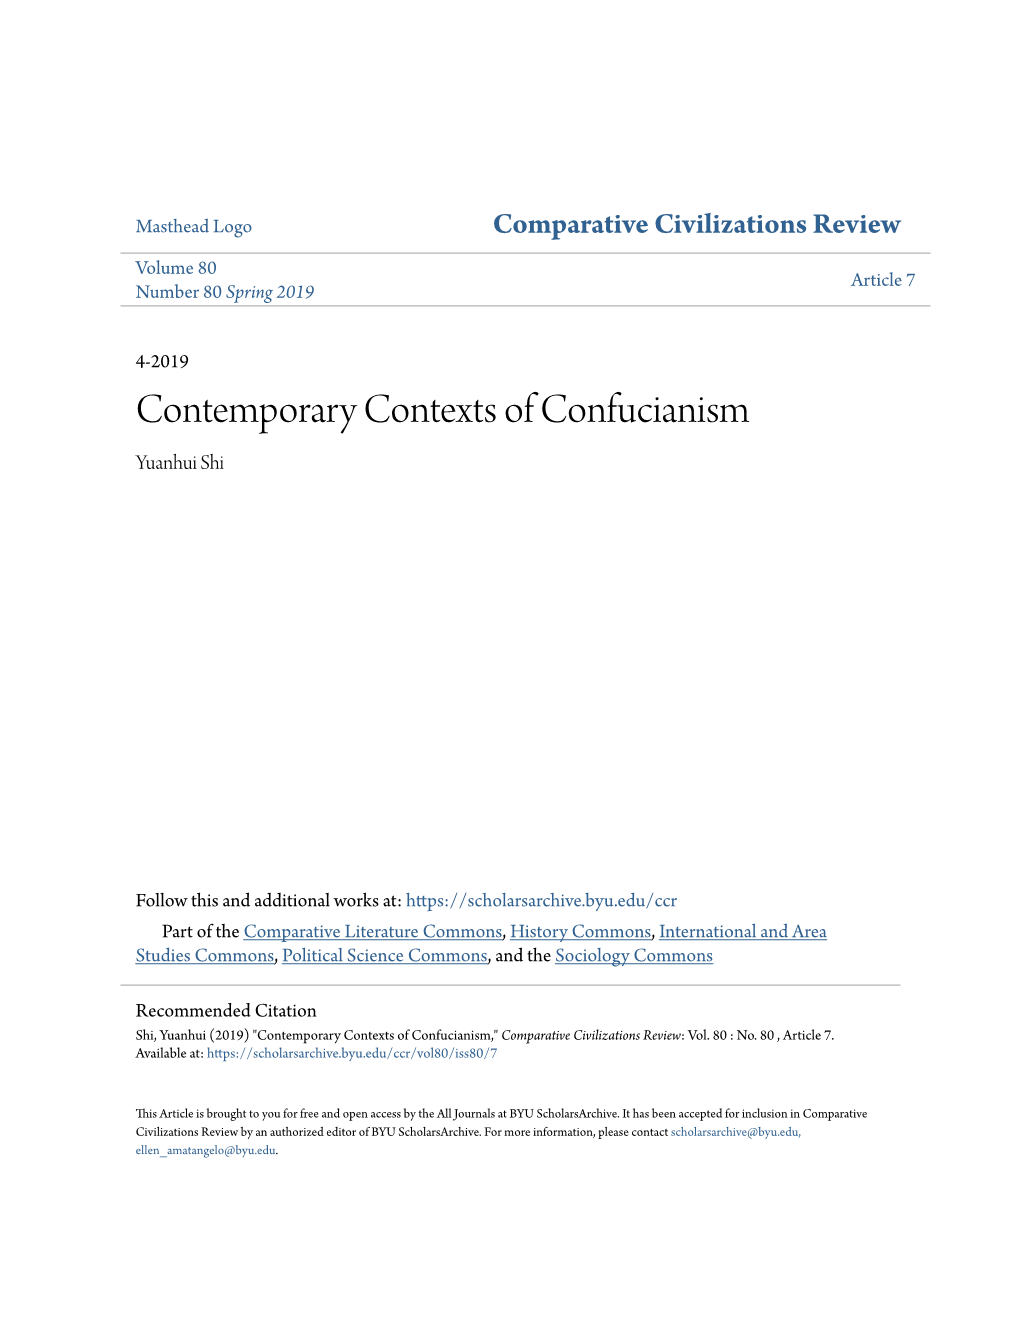 Contemporary Contexts of Confucianism Yuanhui Shi